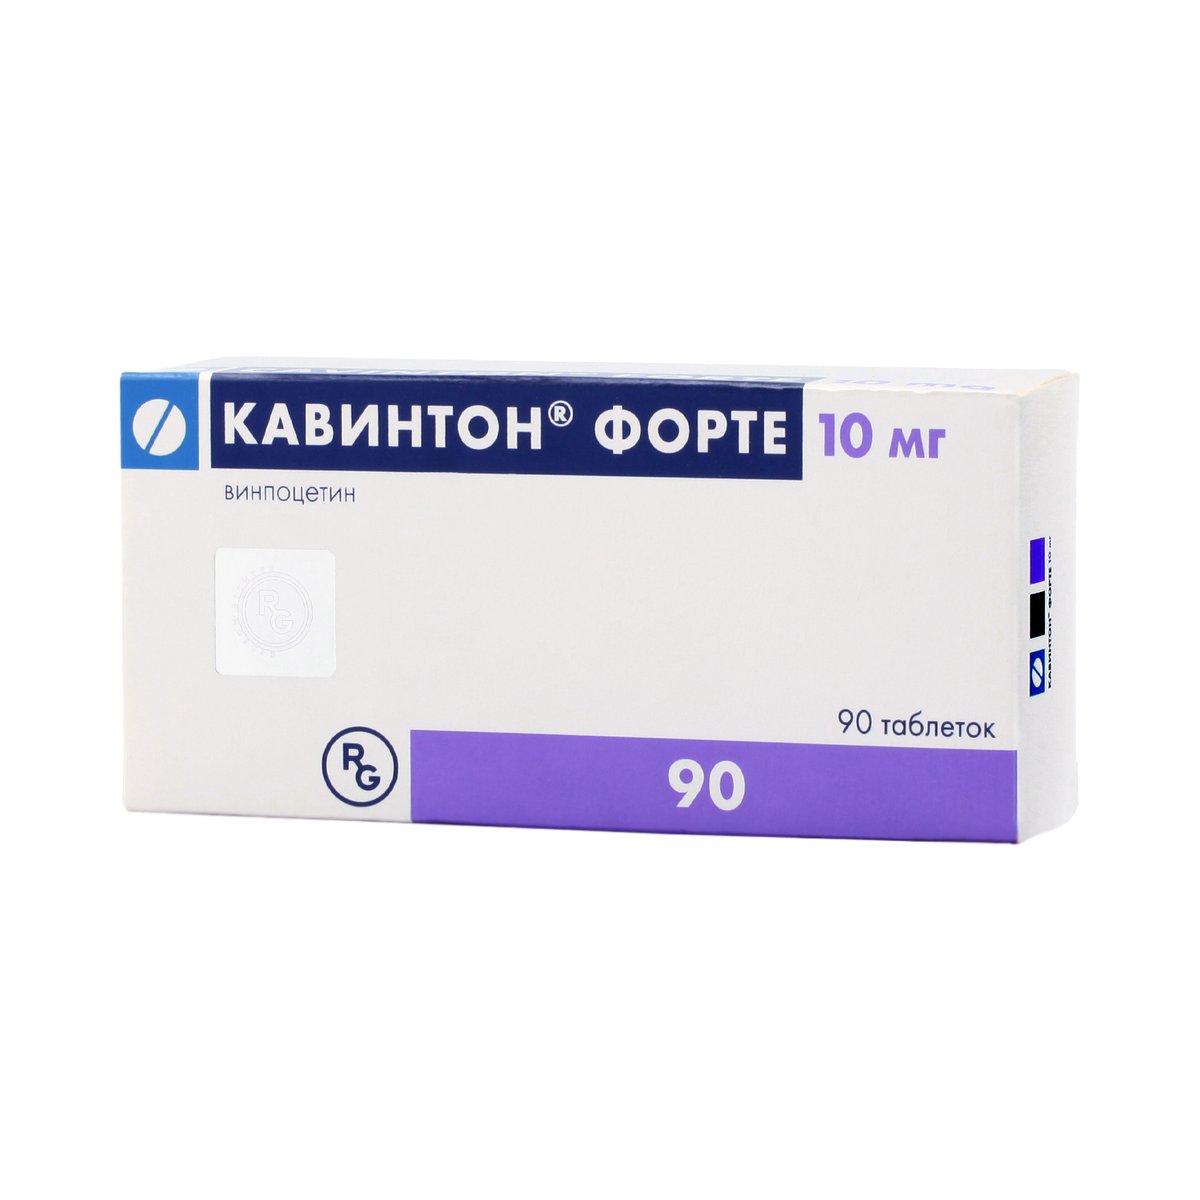 Кавинтон форте (таблетки, 90 шт, 10 мг, для приема внутрь) - цена .